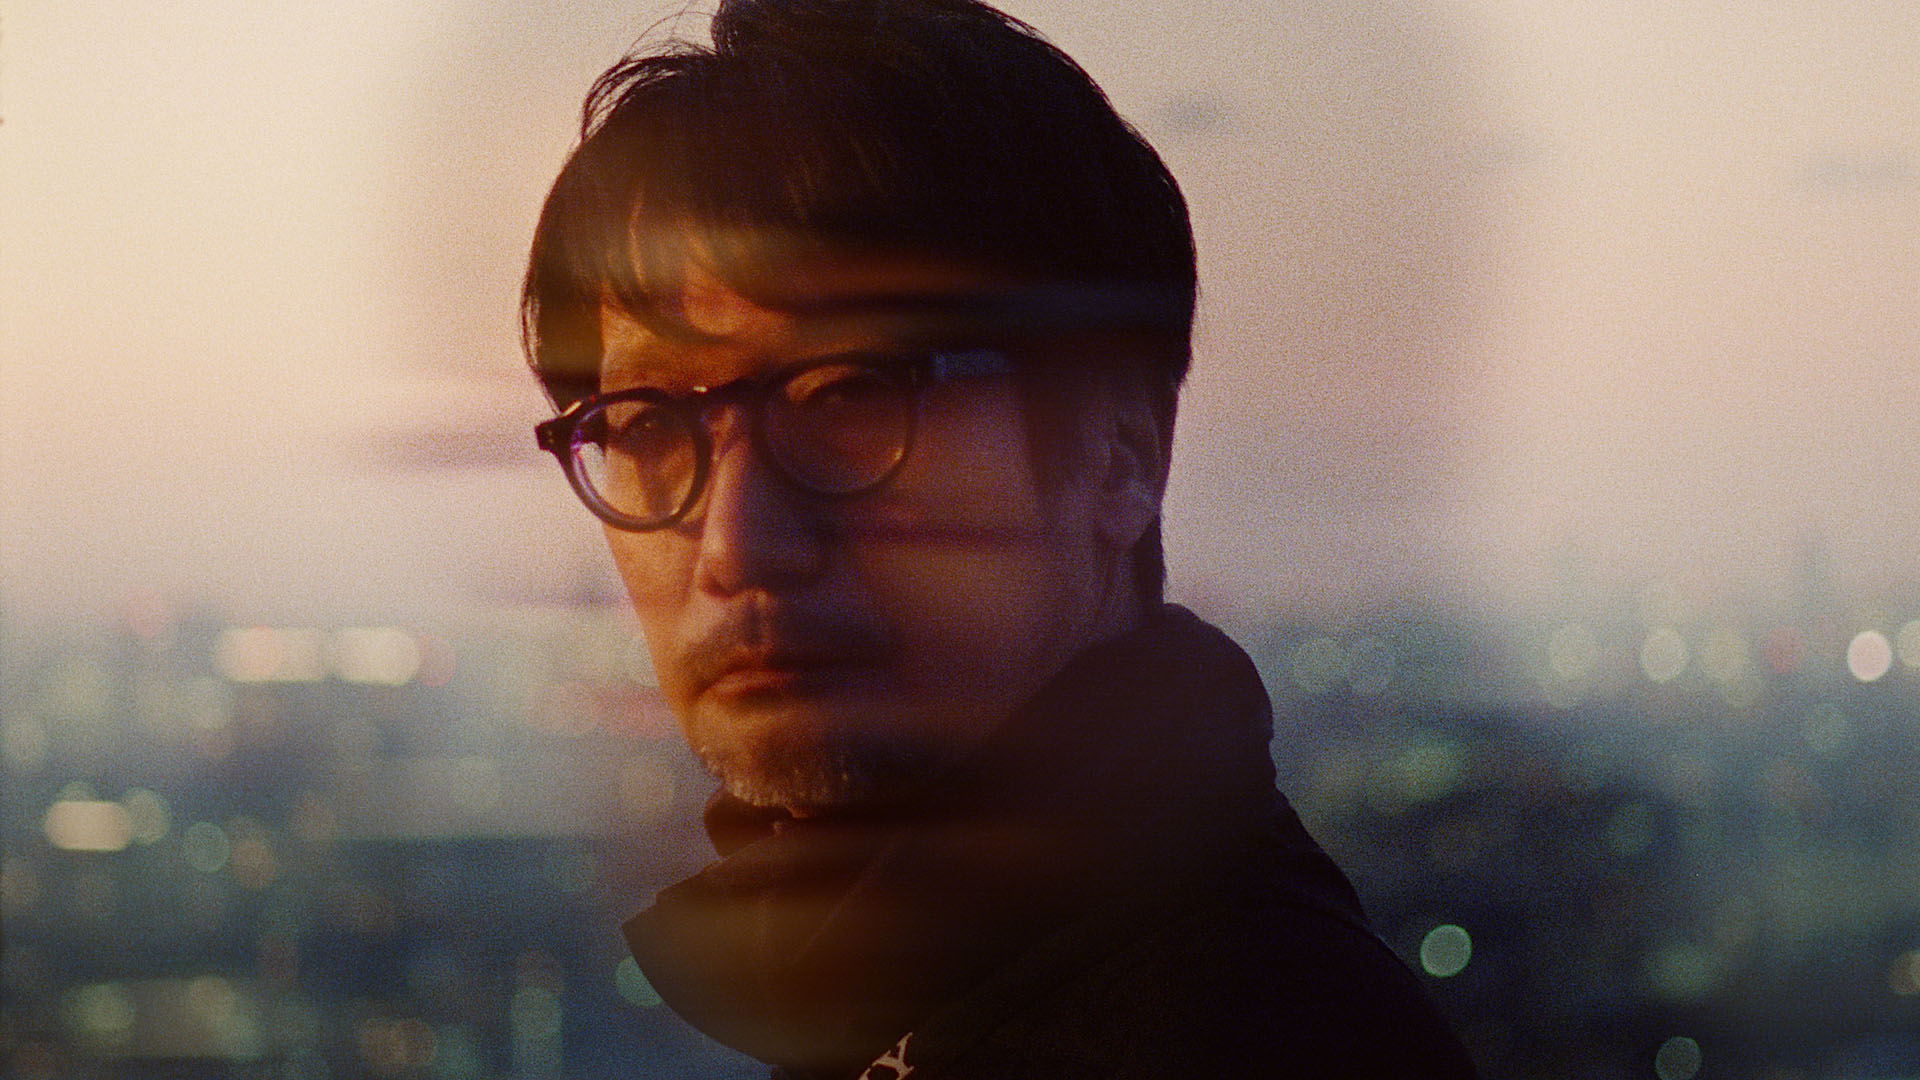 Hideo Kojima to Talk 'Death Stranding' at Tribeca Film Festival